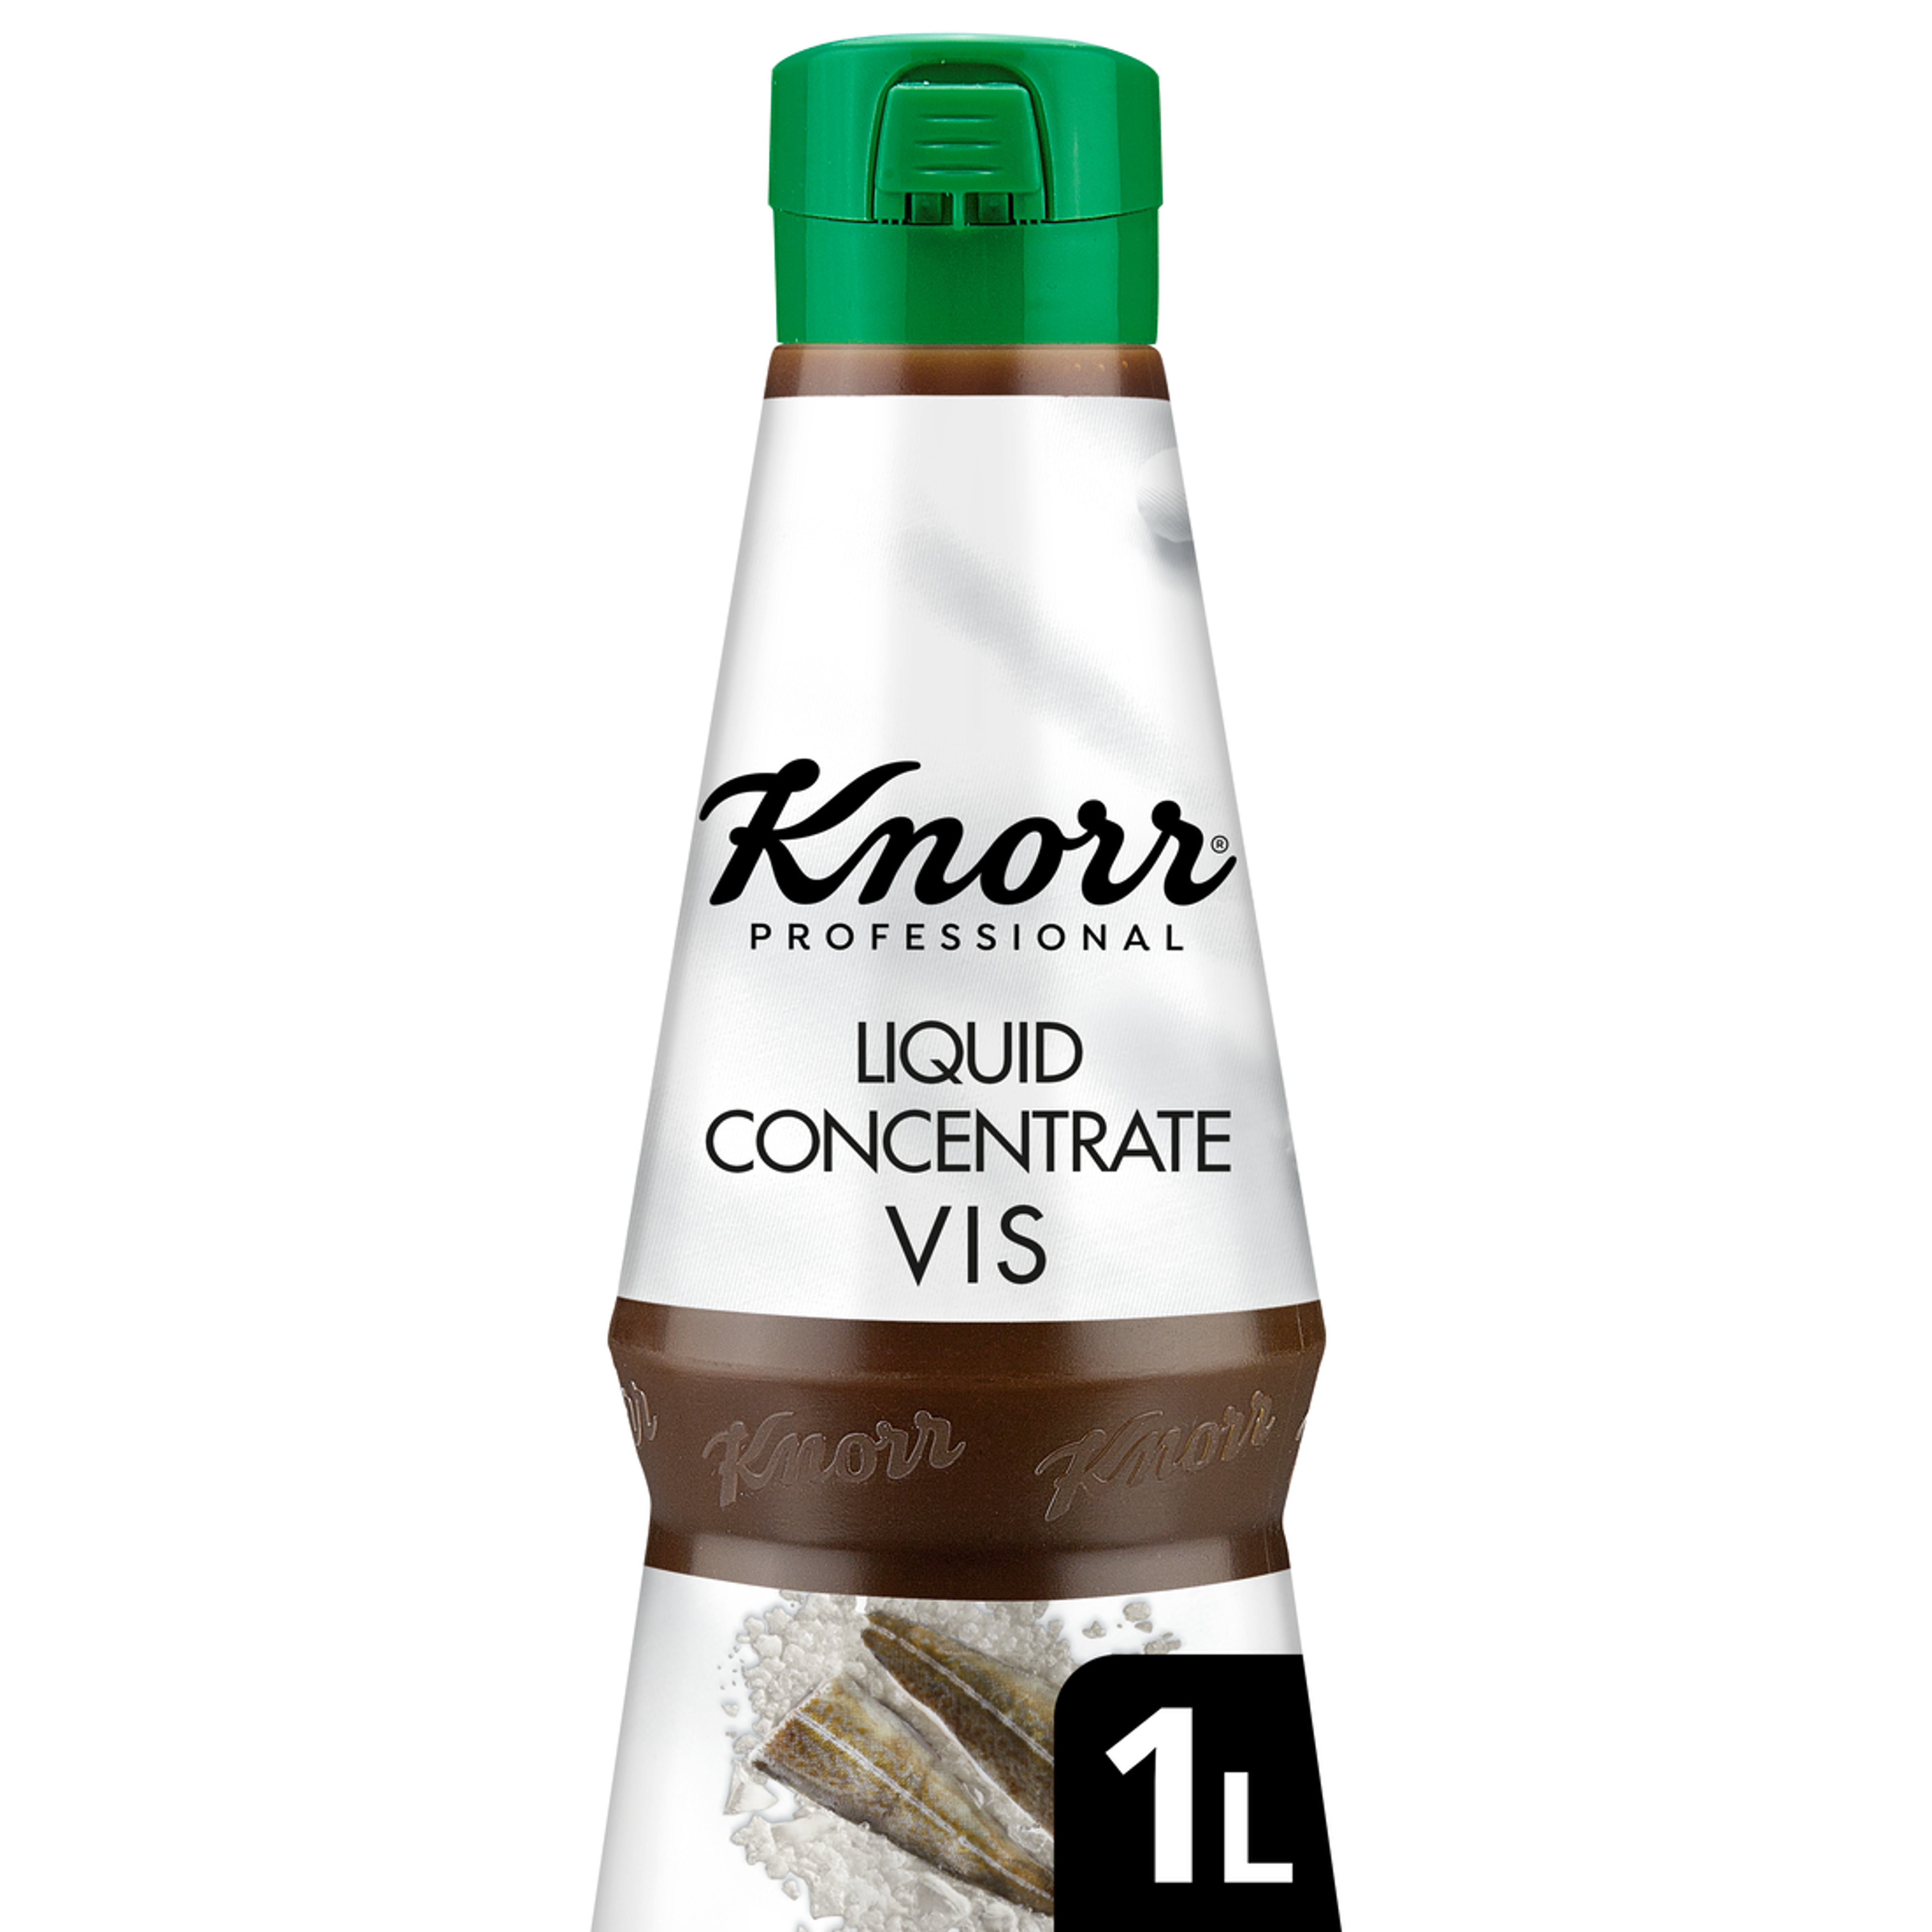 Knorr Professional Liquid Concentrate Vis 1L